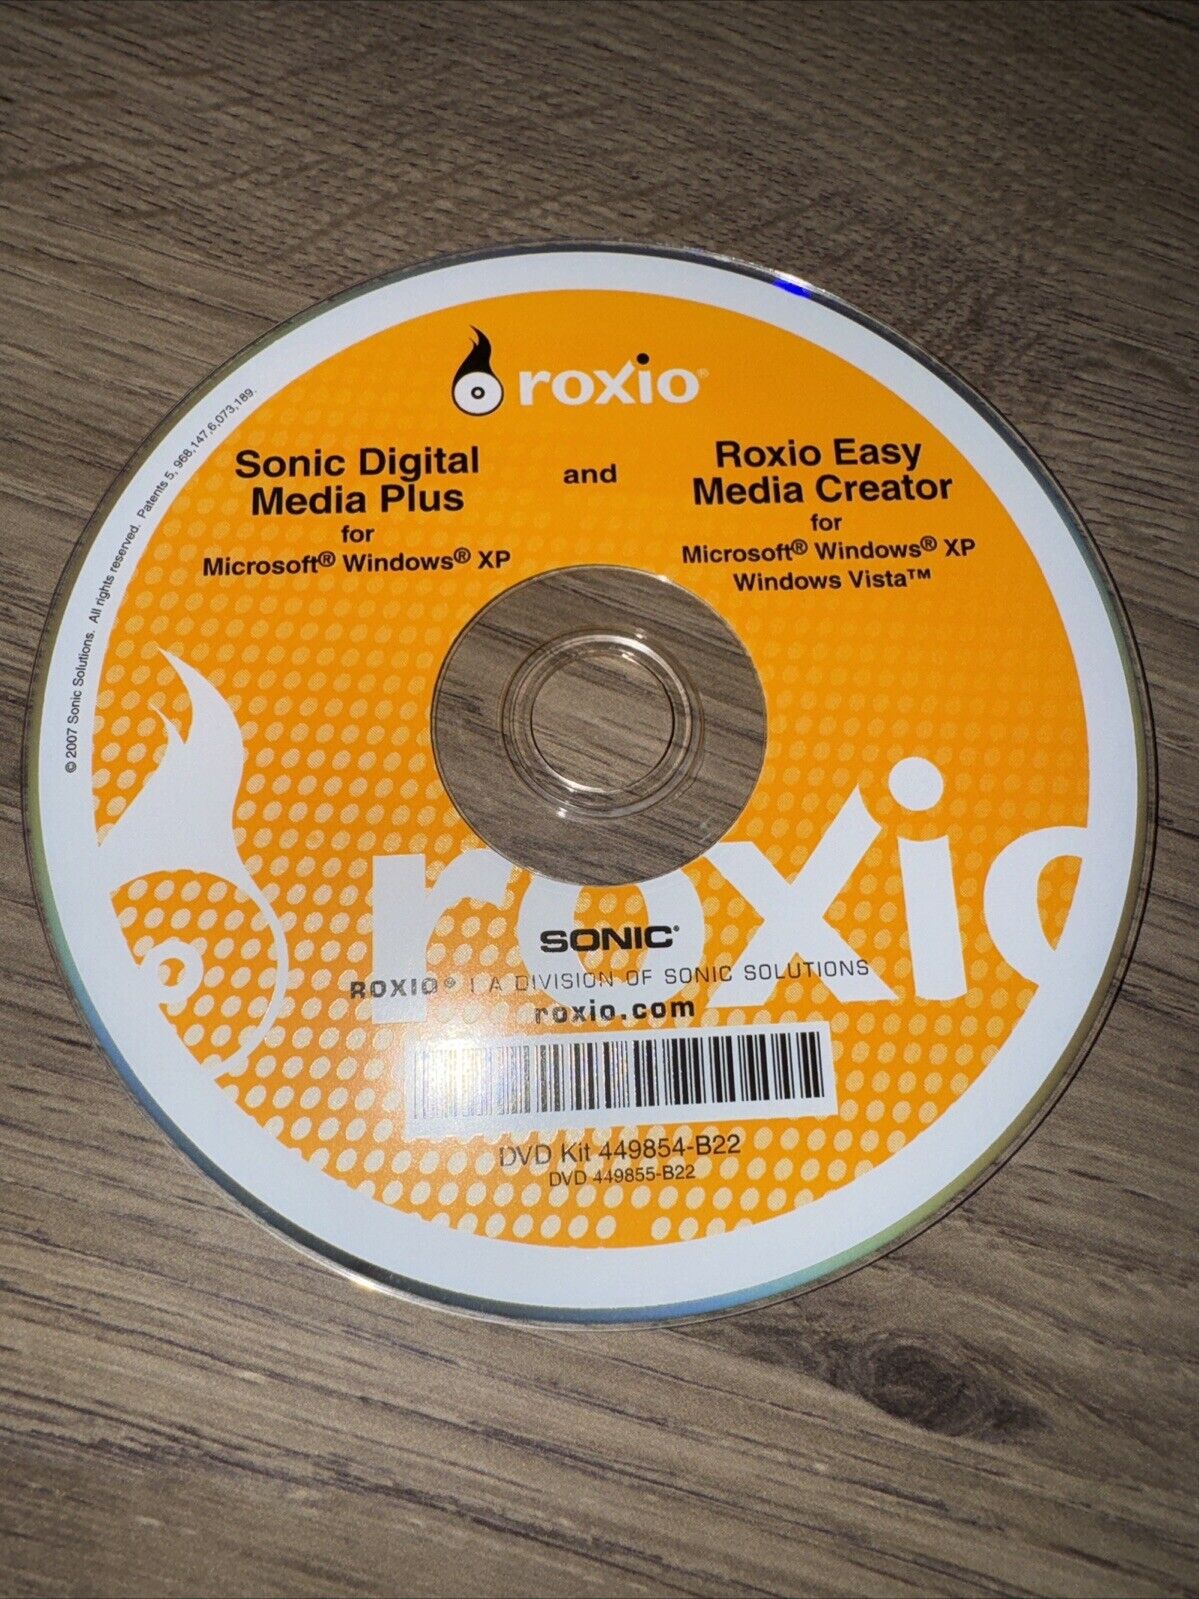 BRAND NEW Roxio Easy Media Creator AND Sonic Digital Media Plus CD